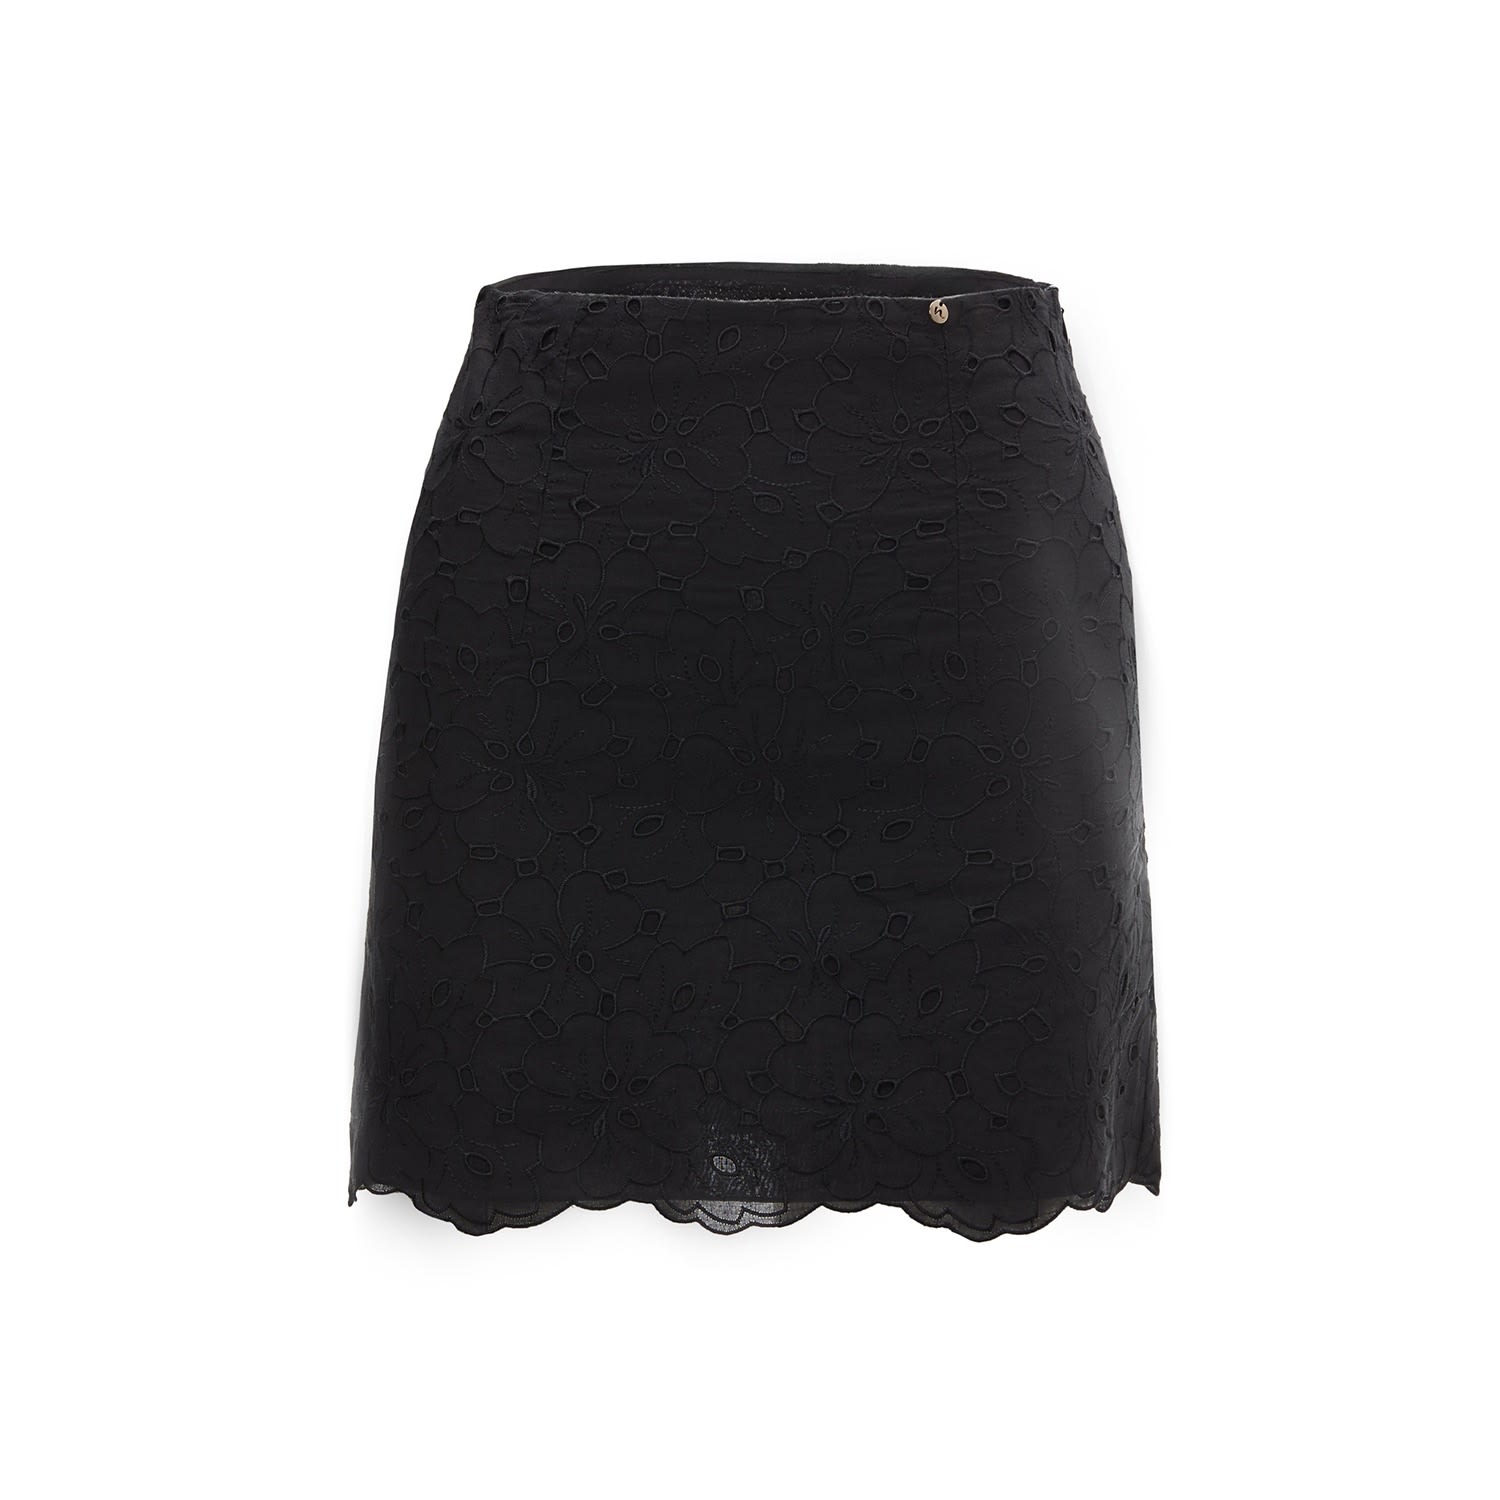 Nissa Women's Embroidered Cotton Skirt Black